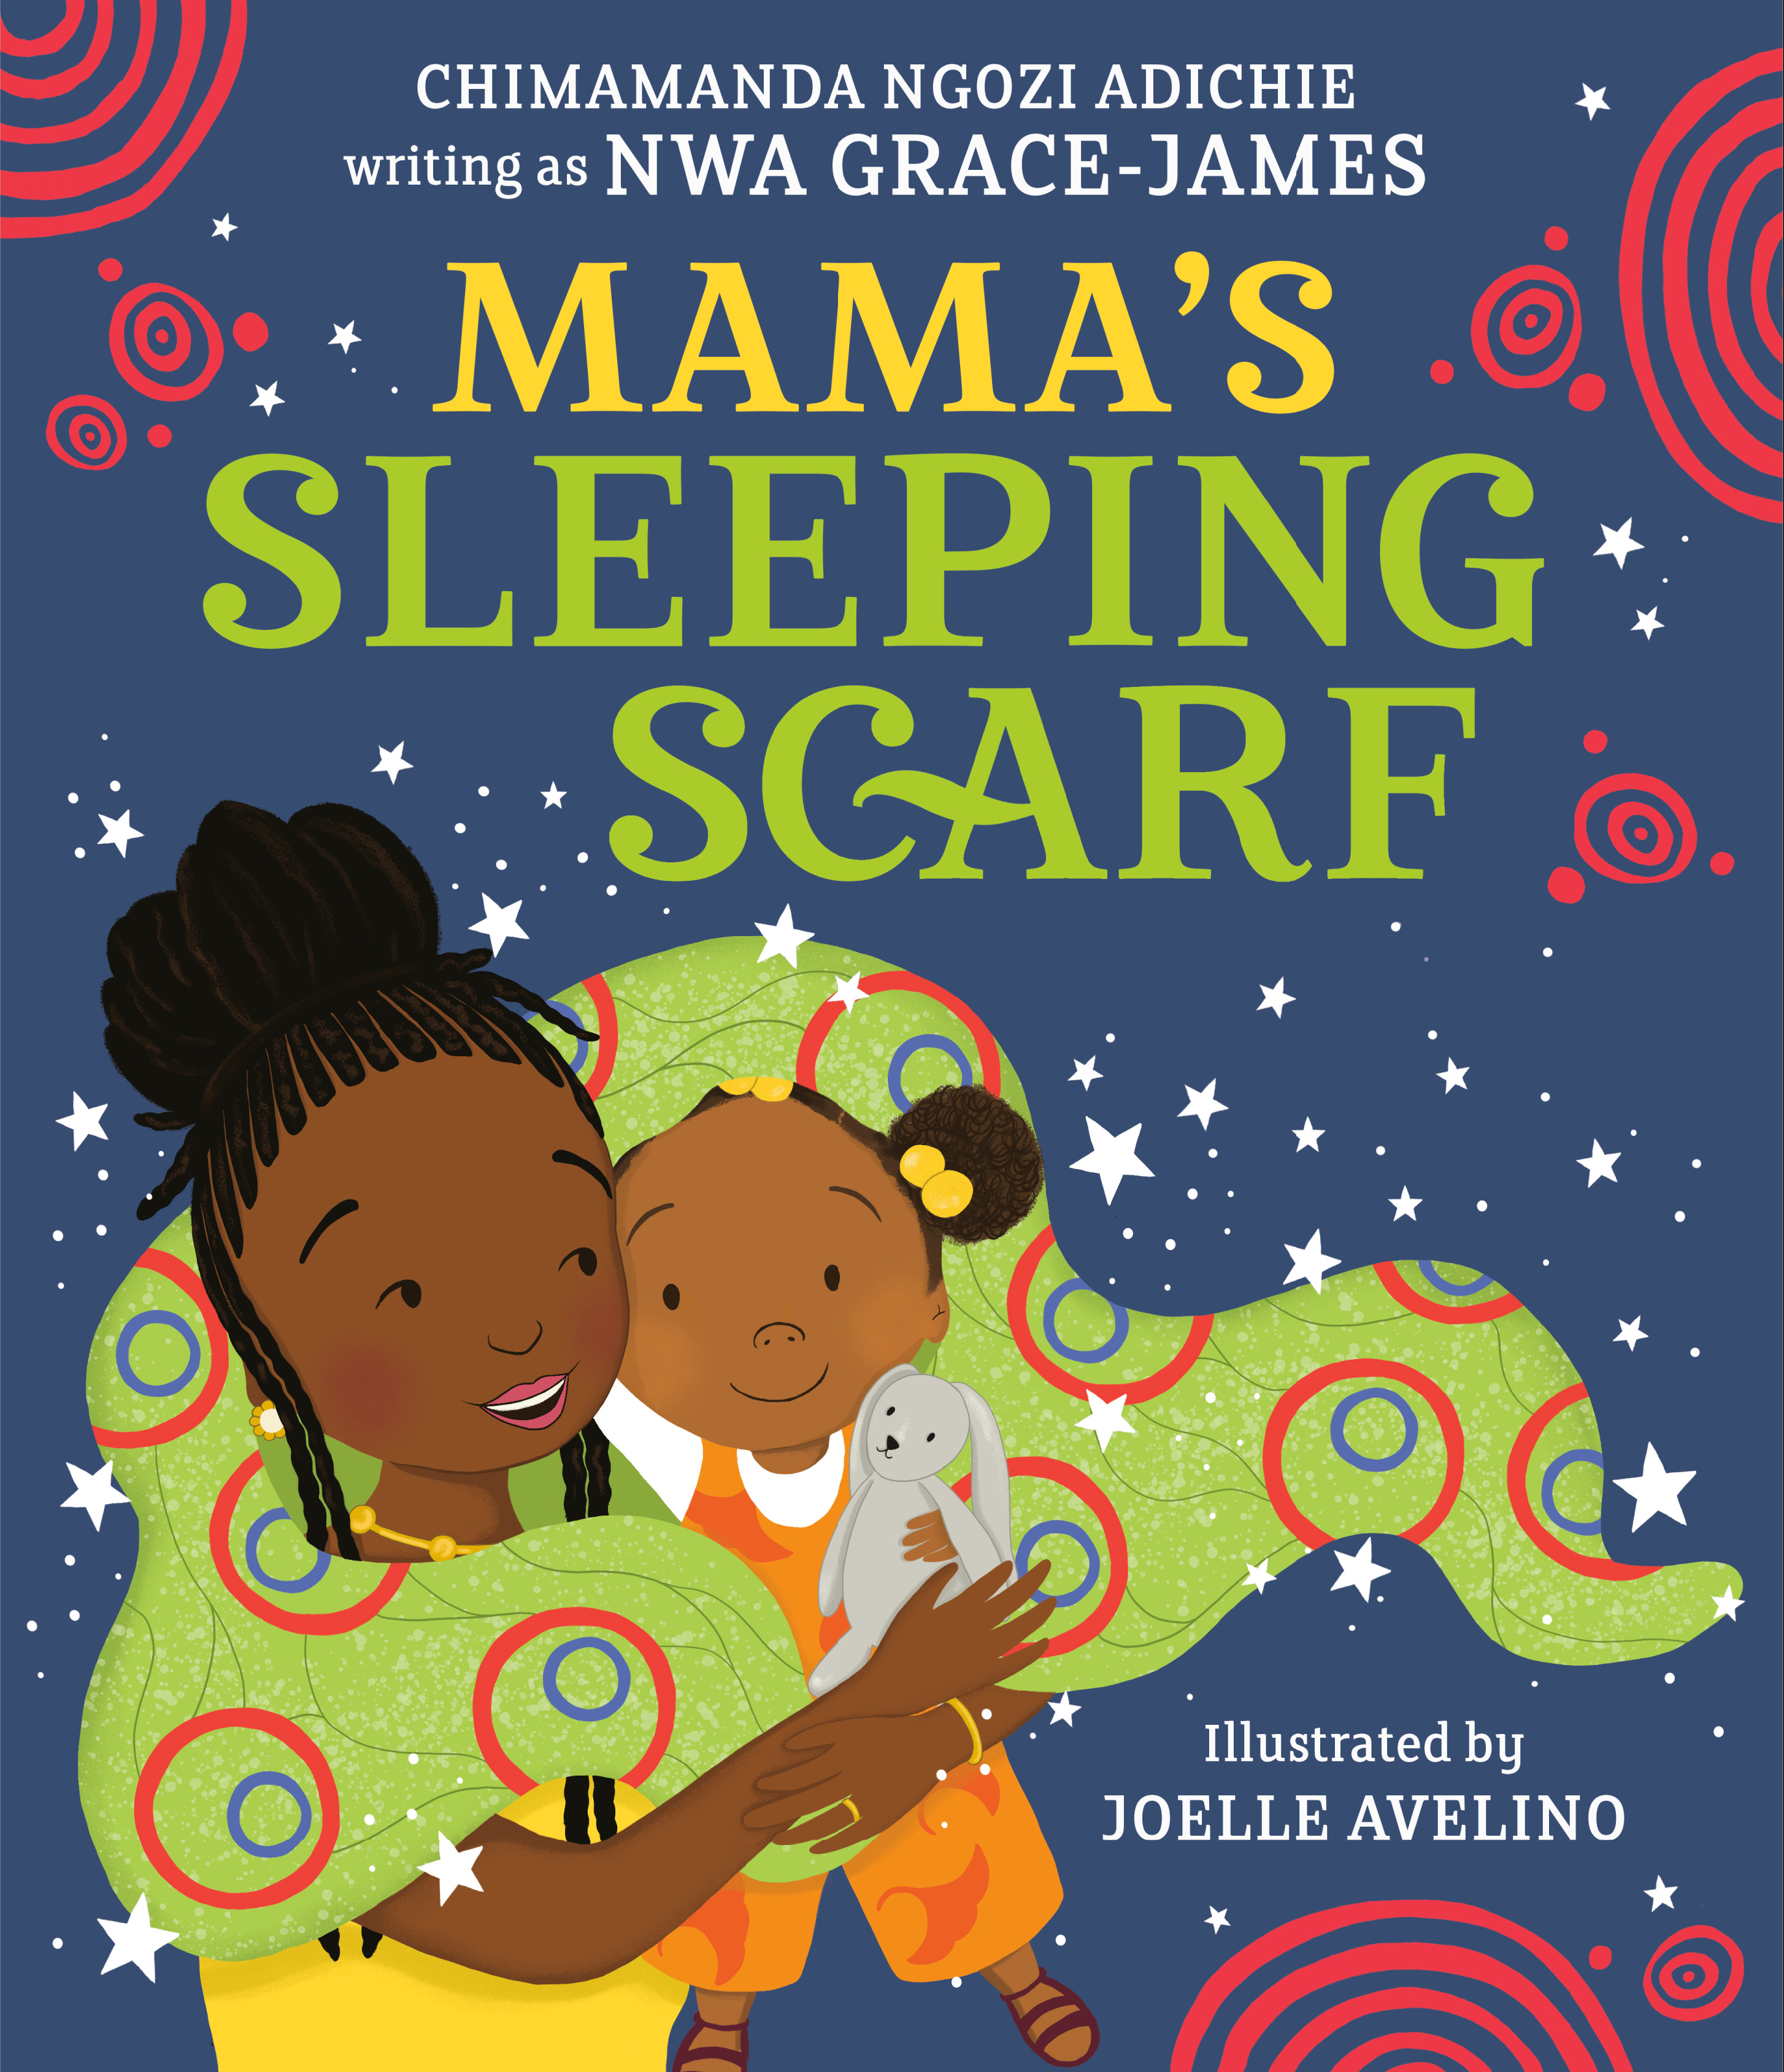 Mama's Sleeping Scarf | Adichie, Chimamanda Ngozi (Auteur) | Grace-James, Nwa (Auteur) | Avelino, Joelle (Illustrateur)